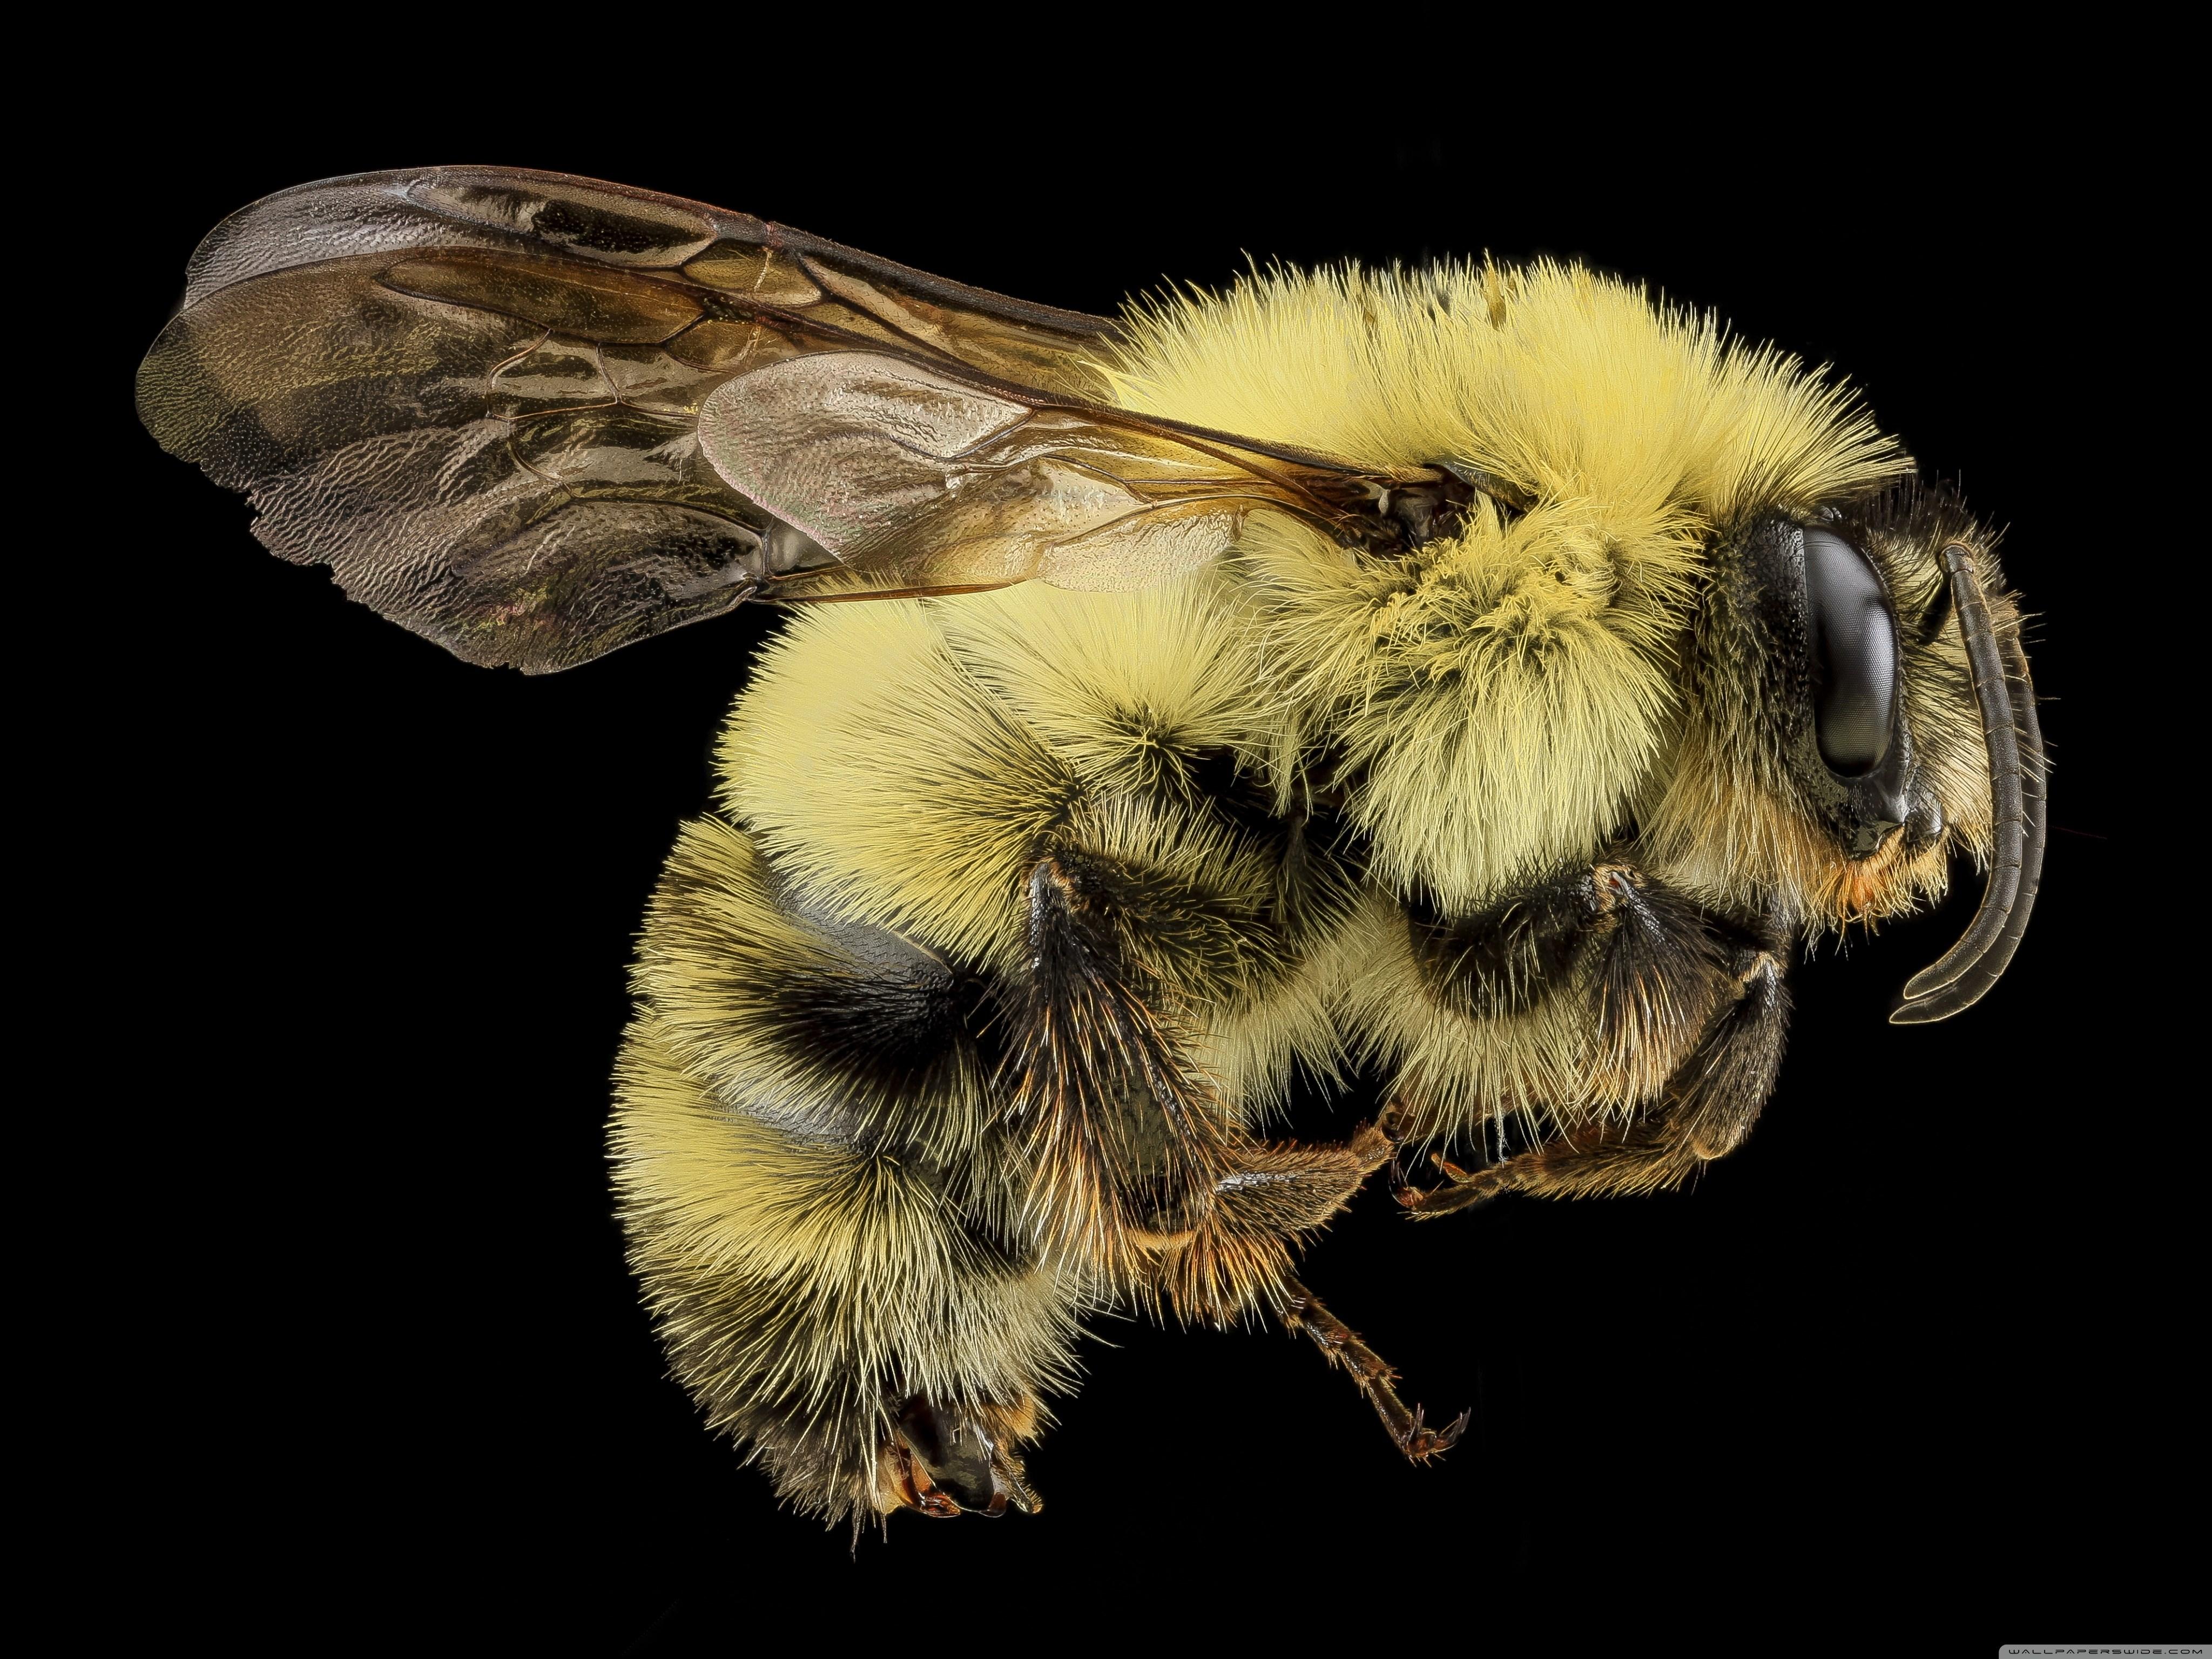 4096x3072 Wallpaper for Desktop: bee. Animal. Tokkoro.com